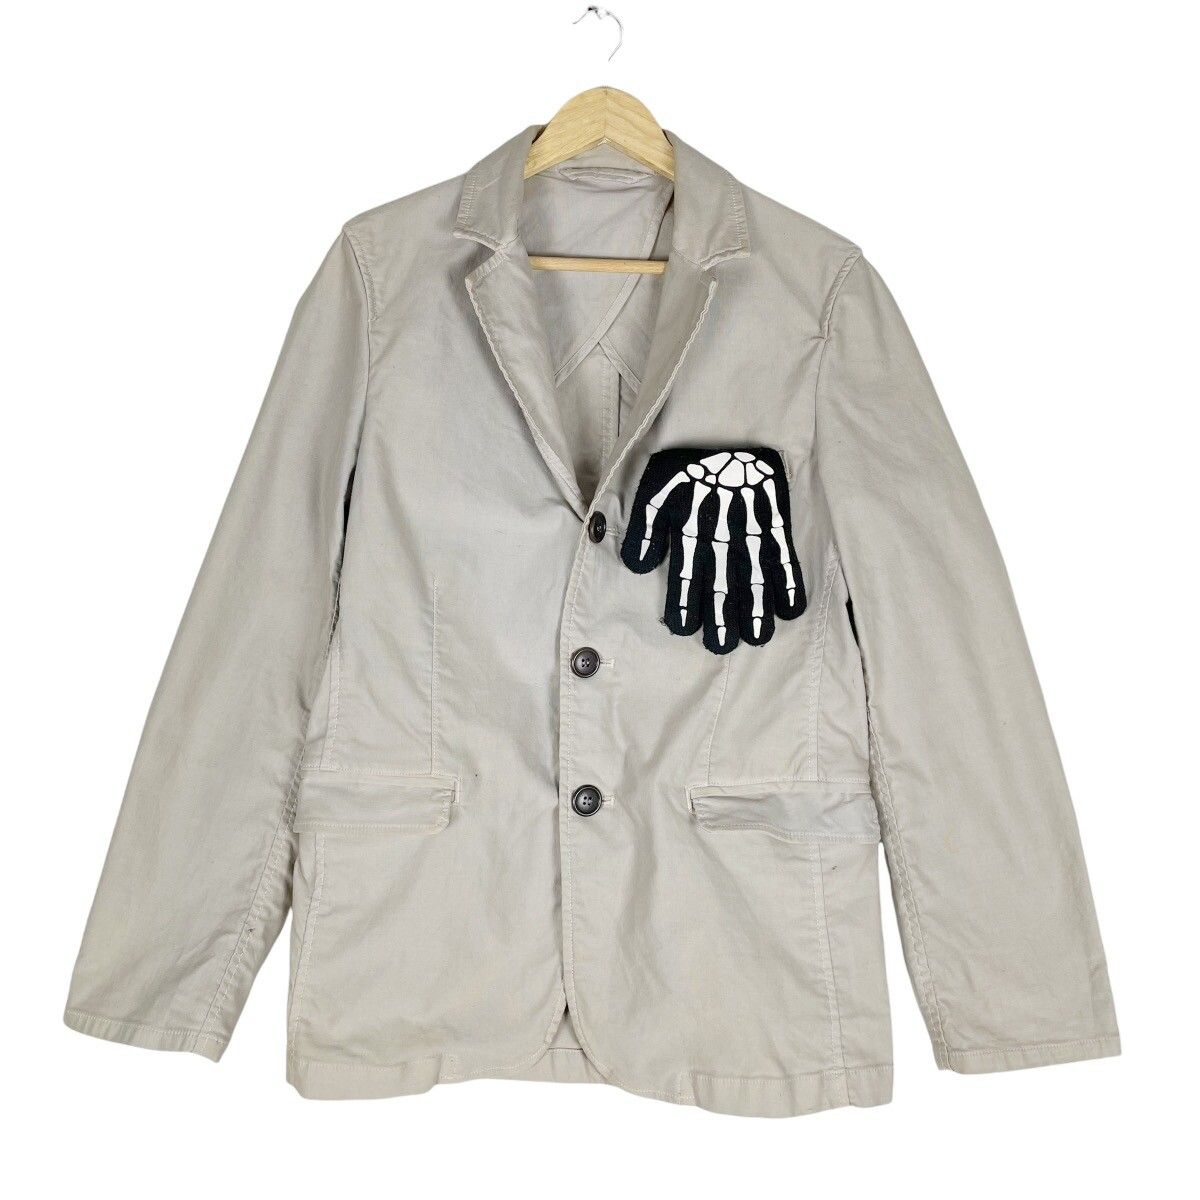 🔥HR Market Japan Workwear Jacket - 1